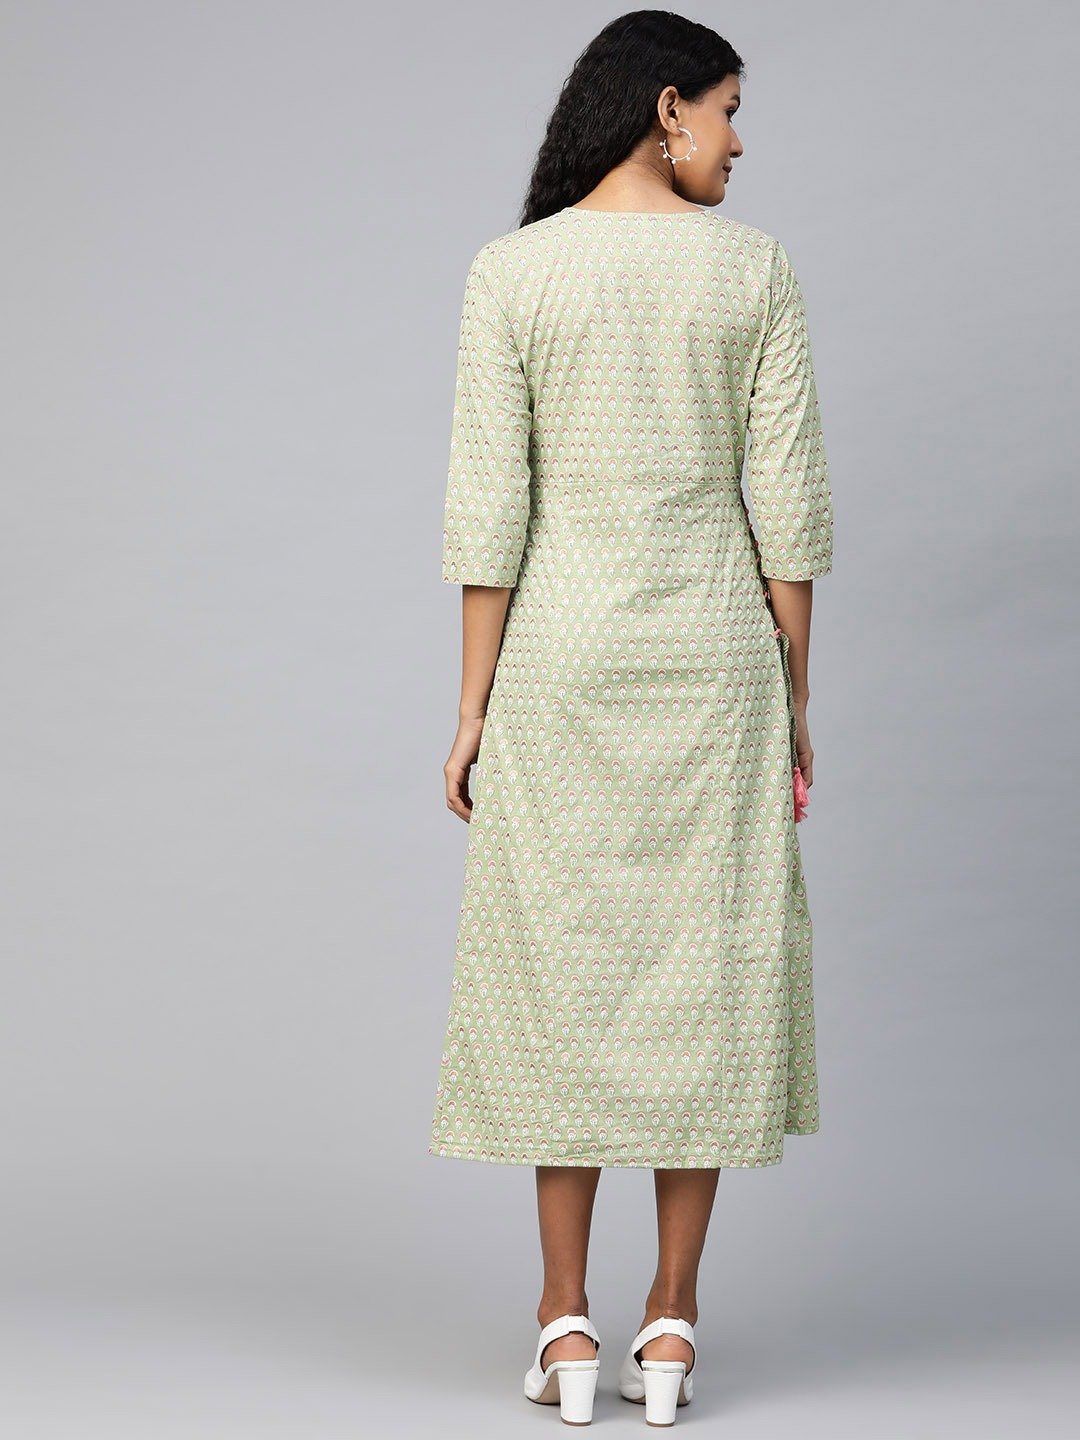 Women's Green Ethnic Motifs Printed A-Line Dress - Nayo Clothing